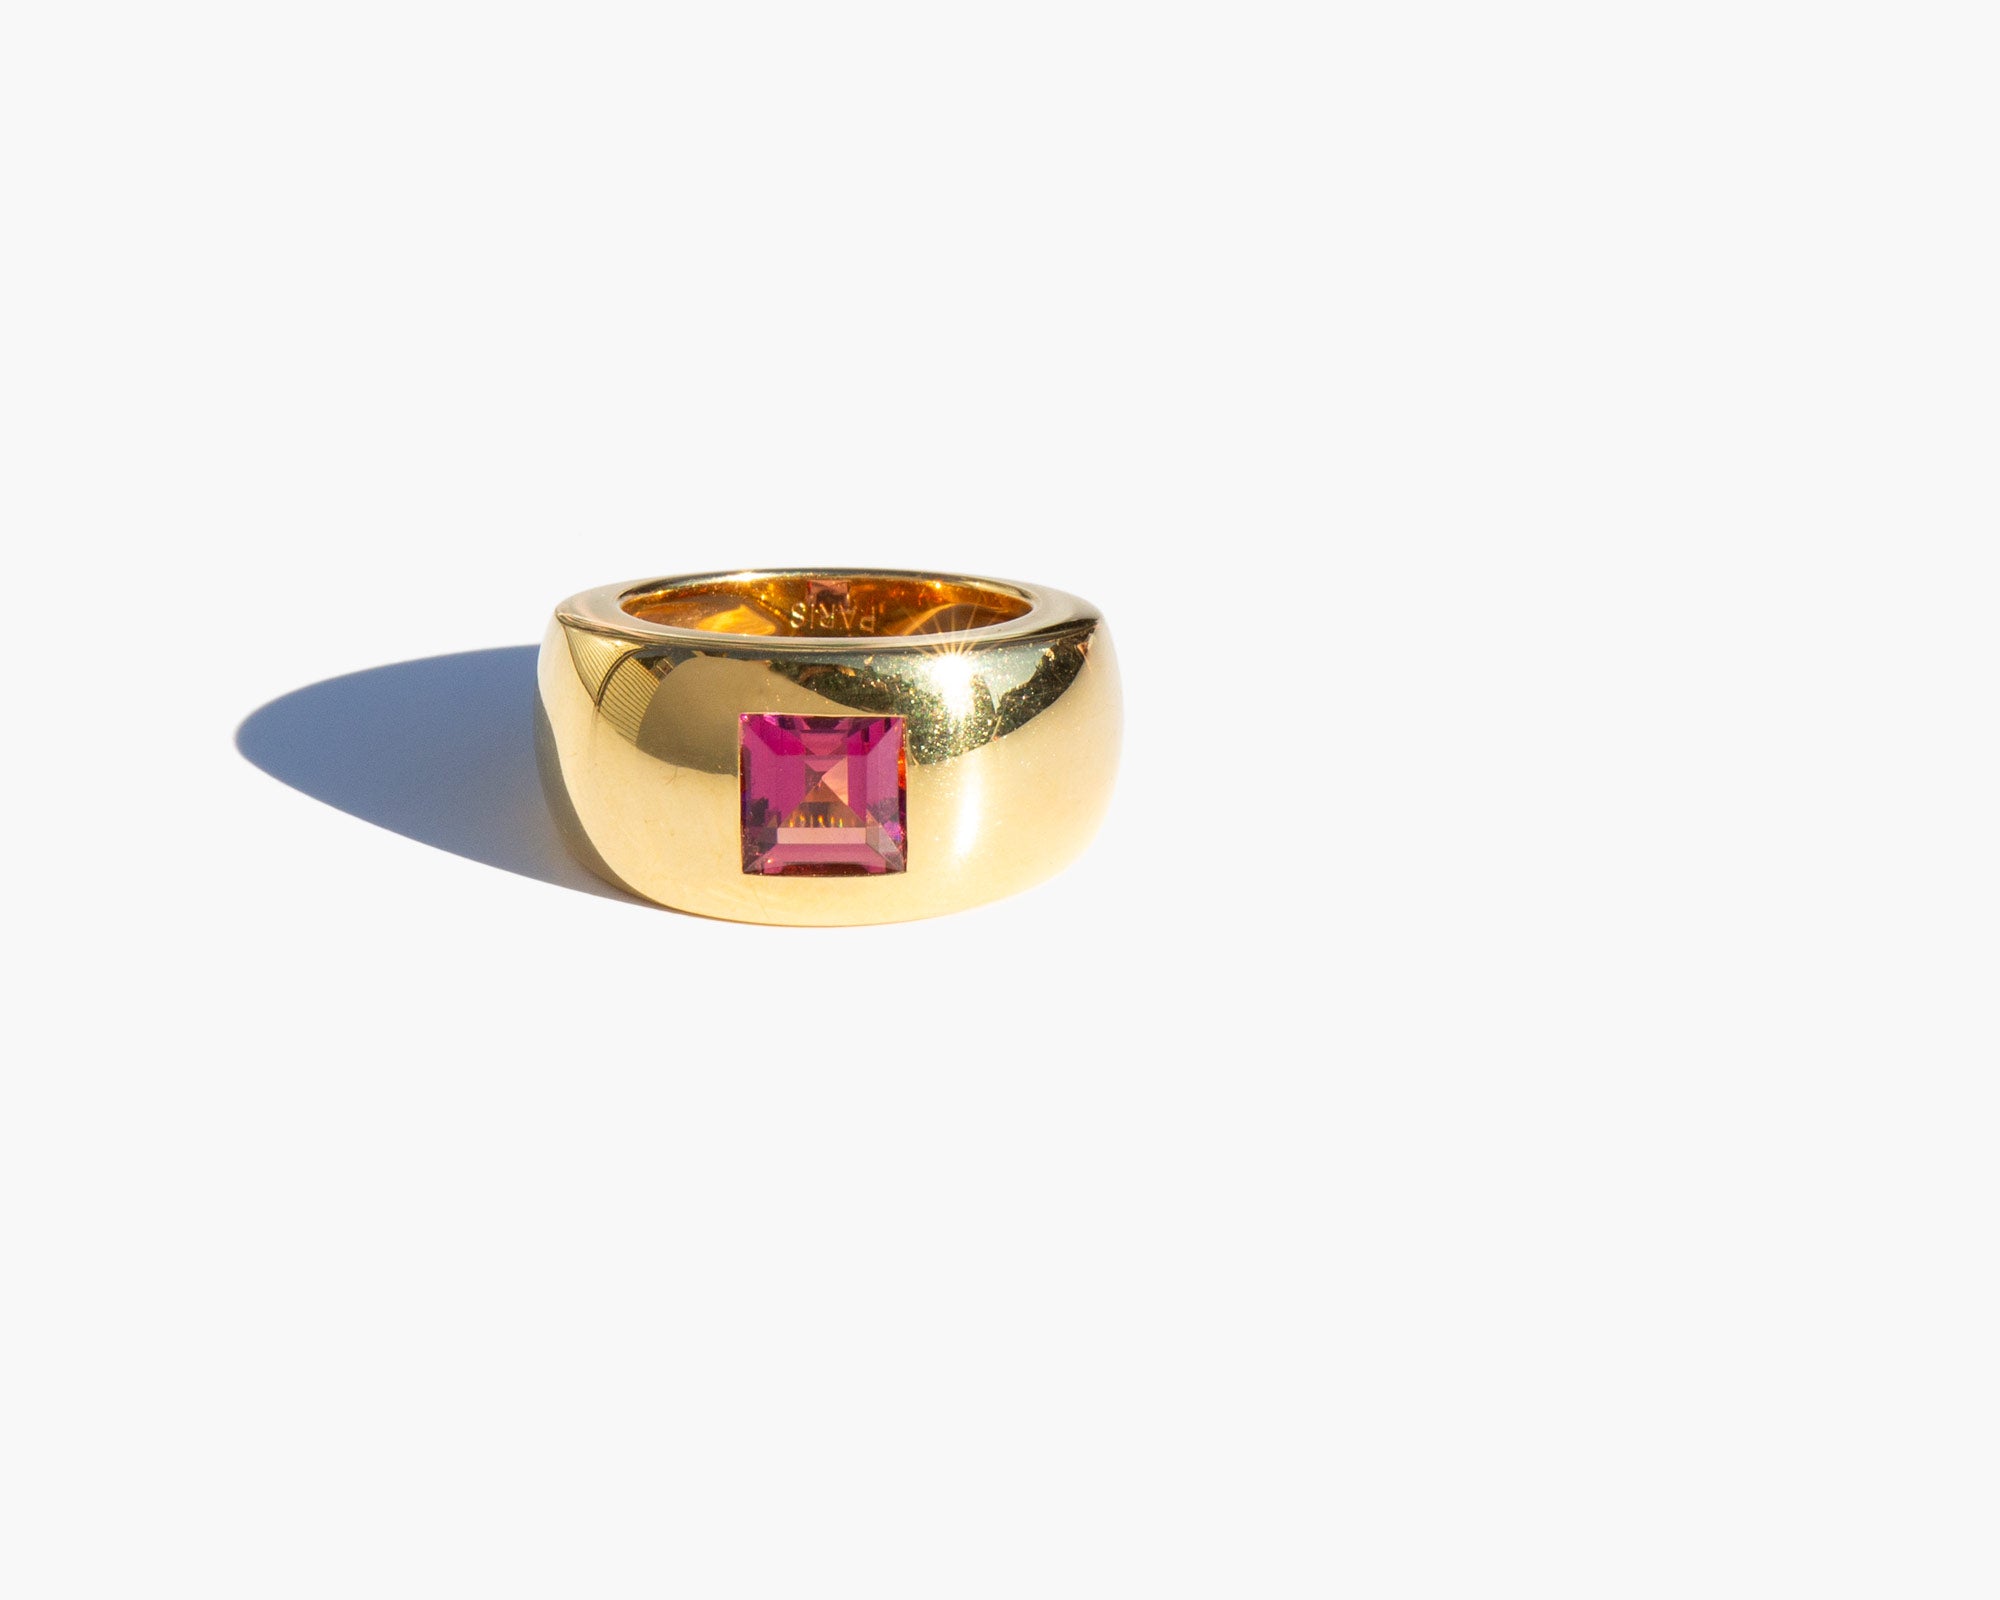 Chaumet Pink Tourmaline Ring